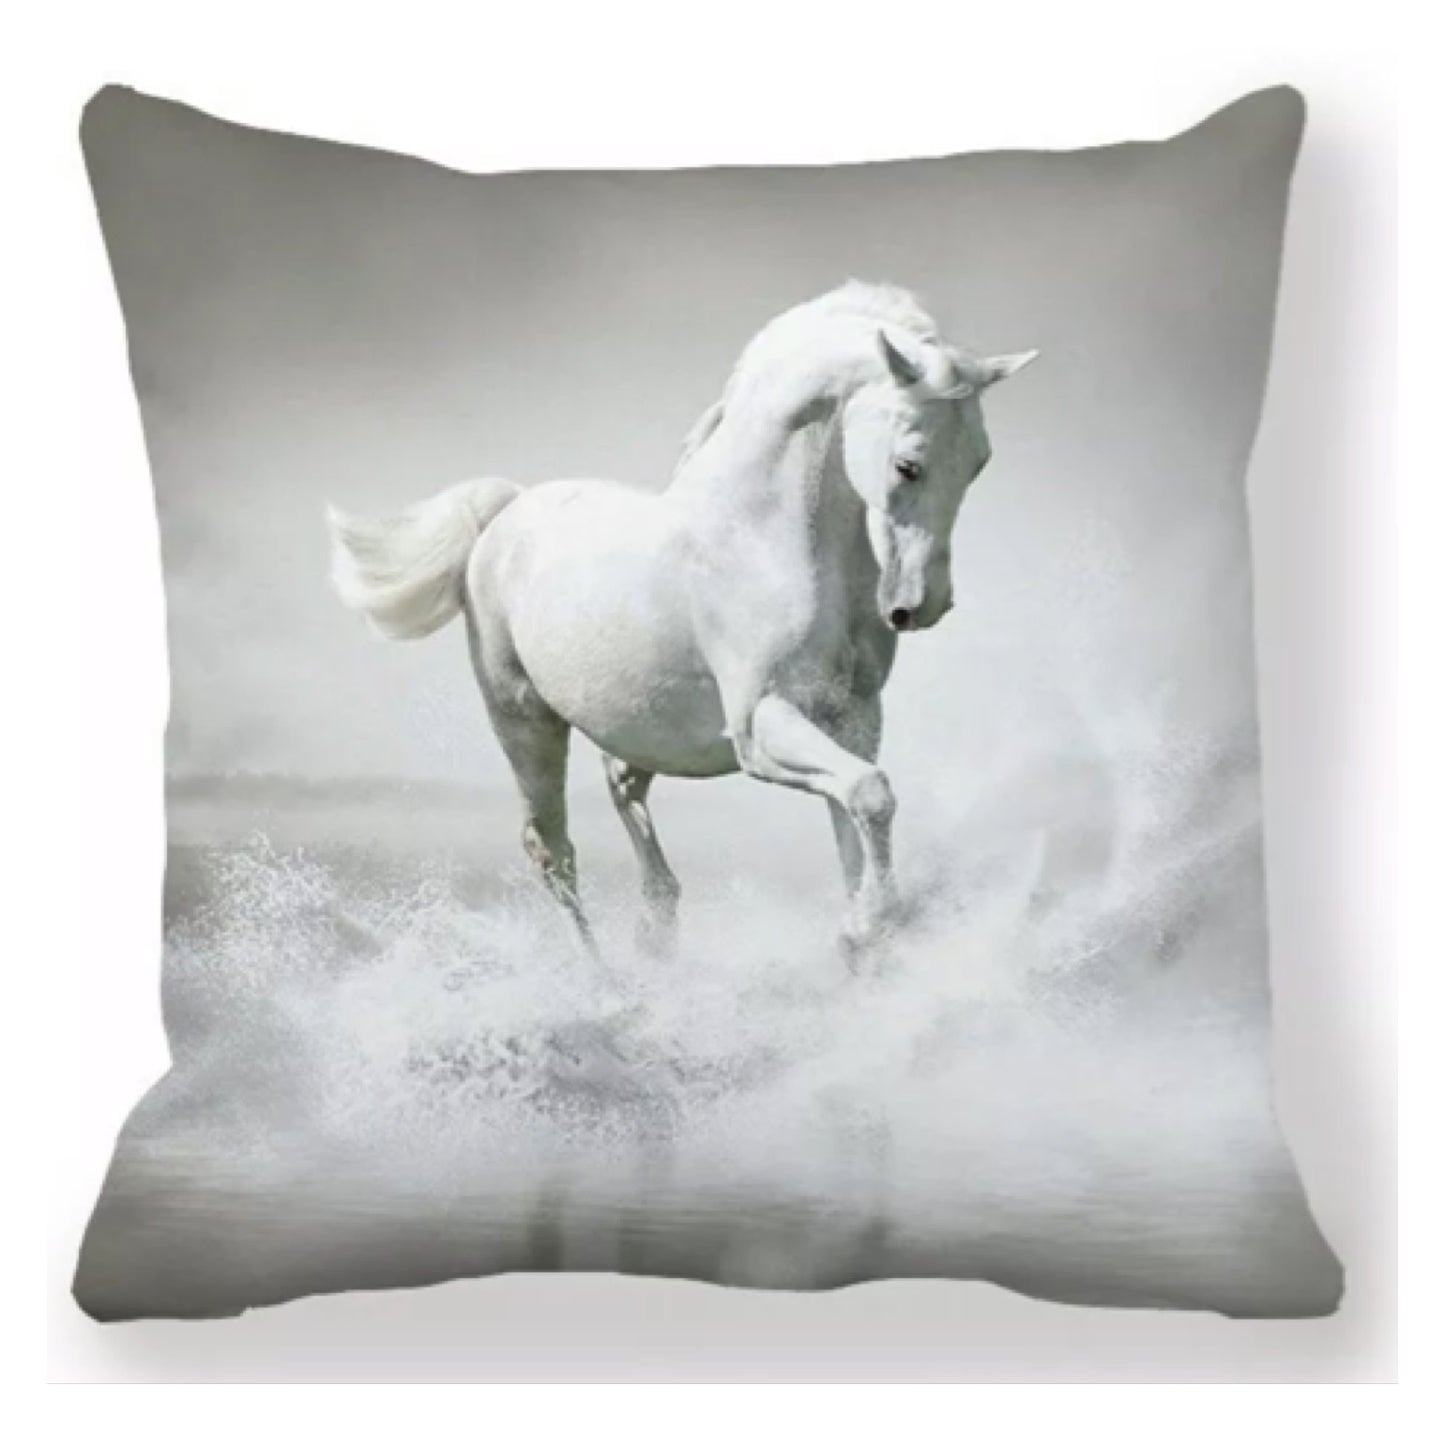 Cushion Cover Horse White Wisdom